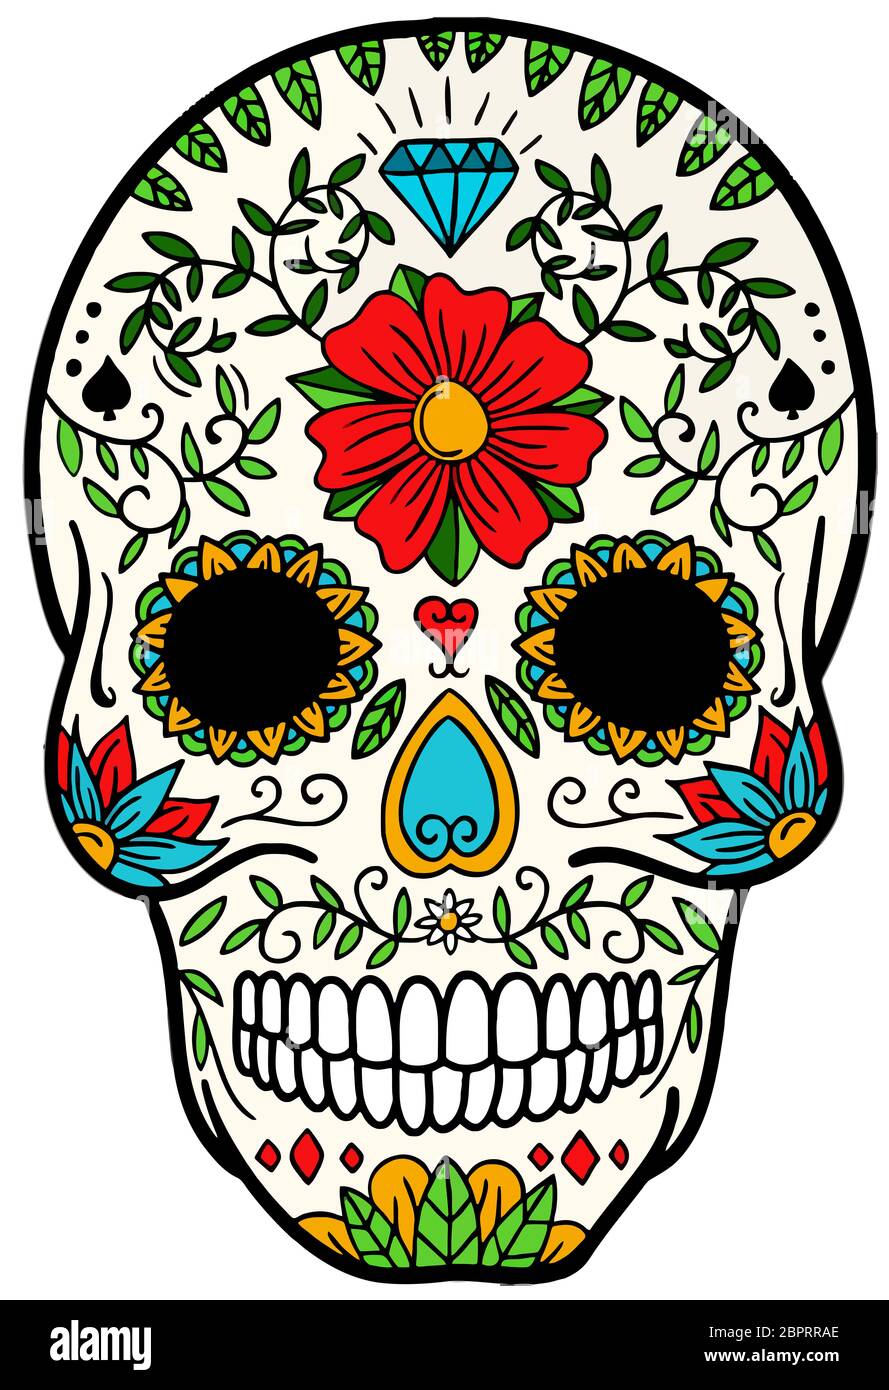 alumno considerado Disfrazado calavera skull mexican festival celebration dead day halloween illustration  Stock Photo - Alamy